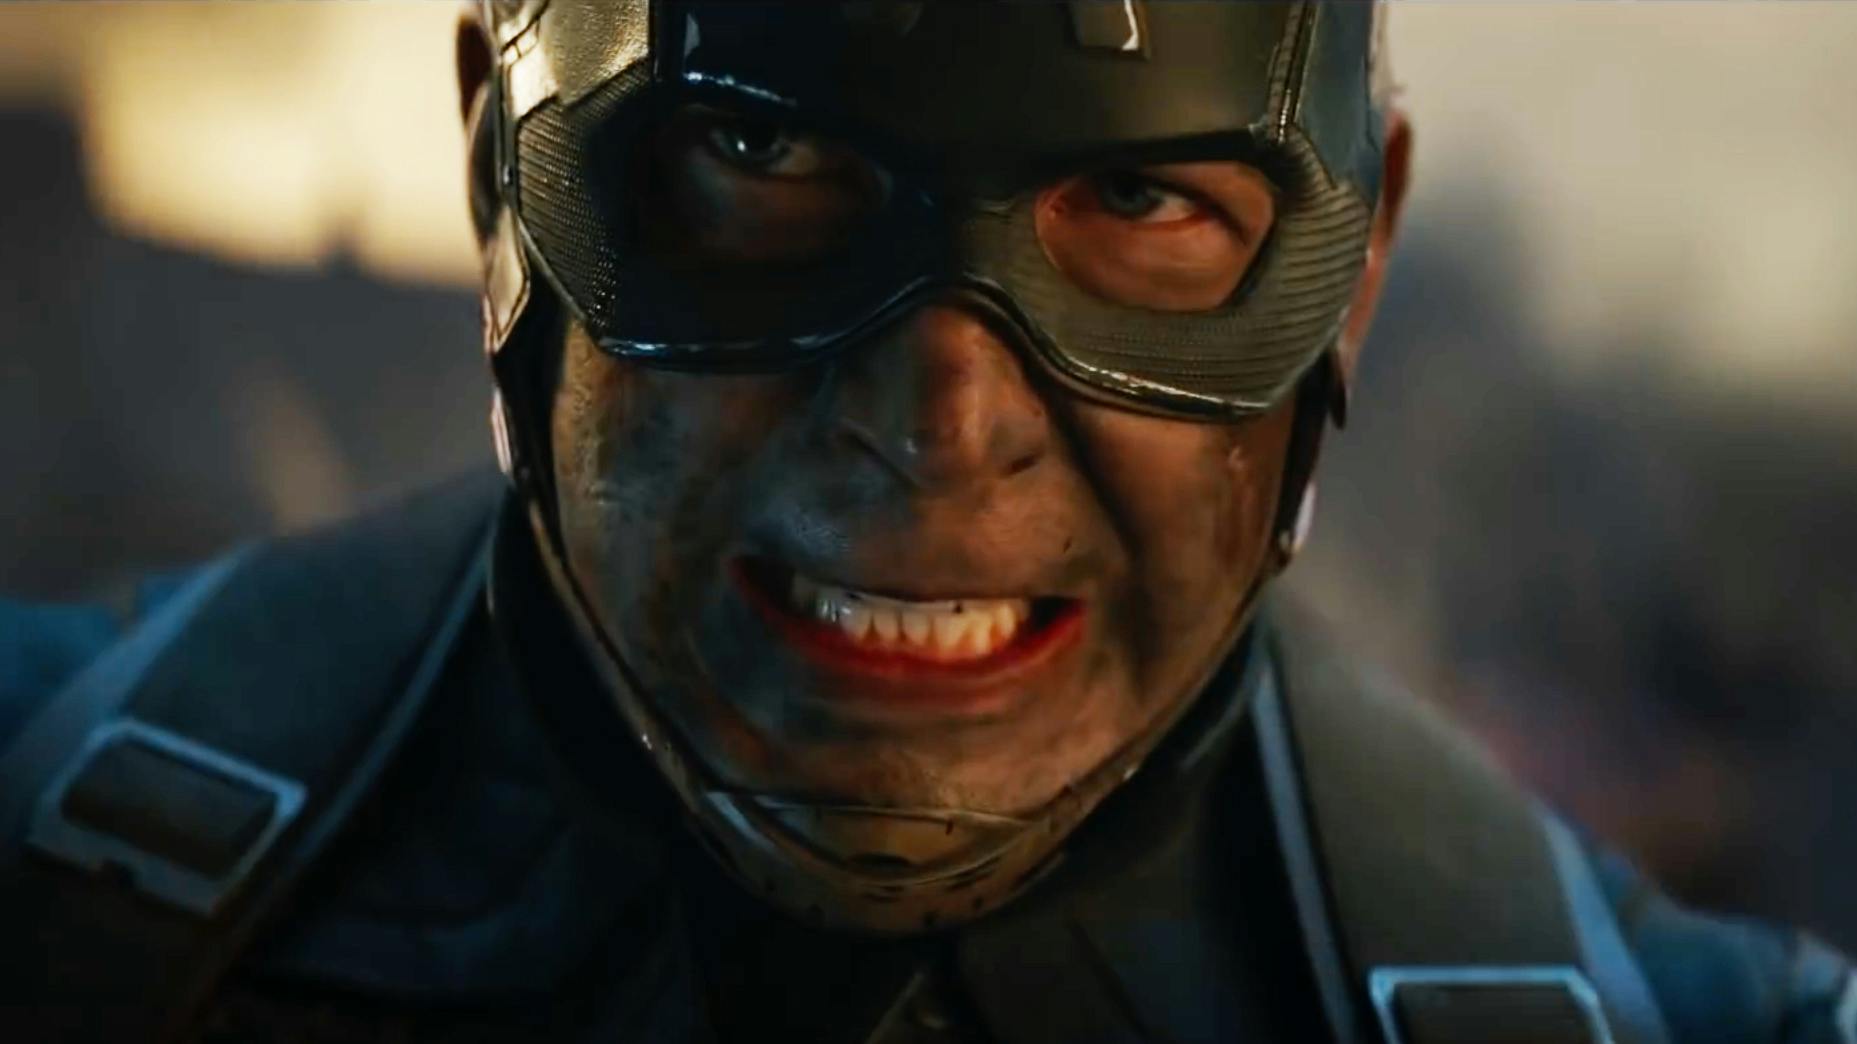 Infinity War recap for Avengers Endgame and Expected Ending